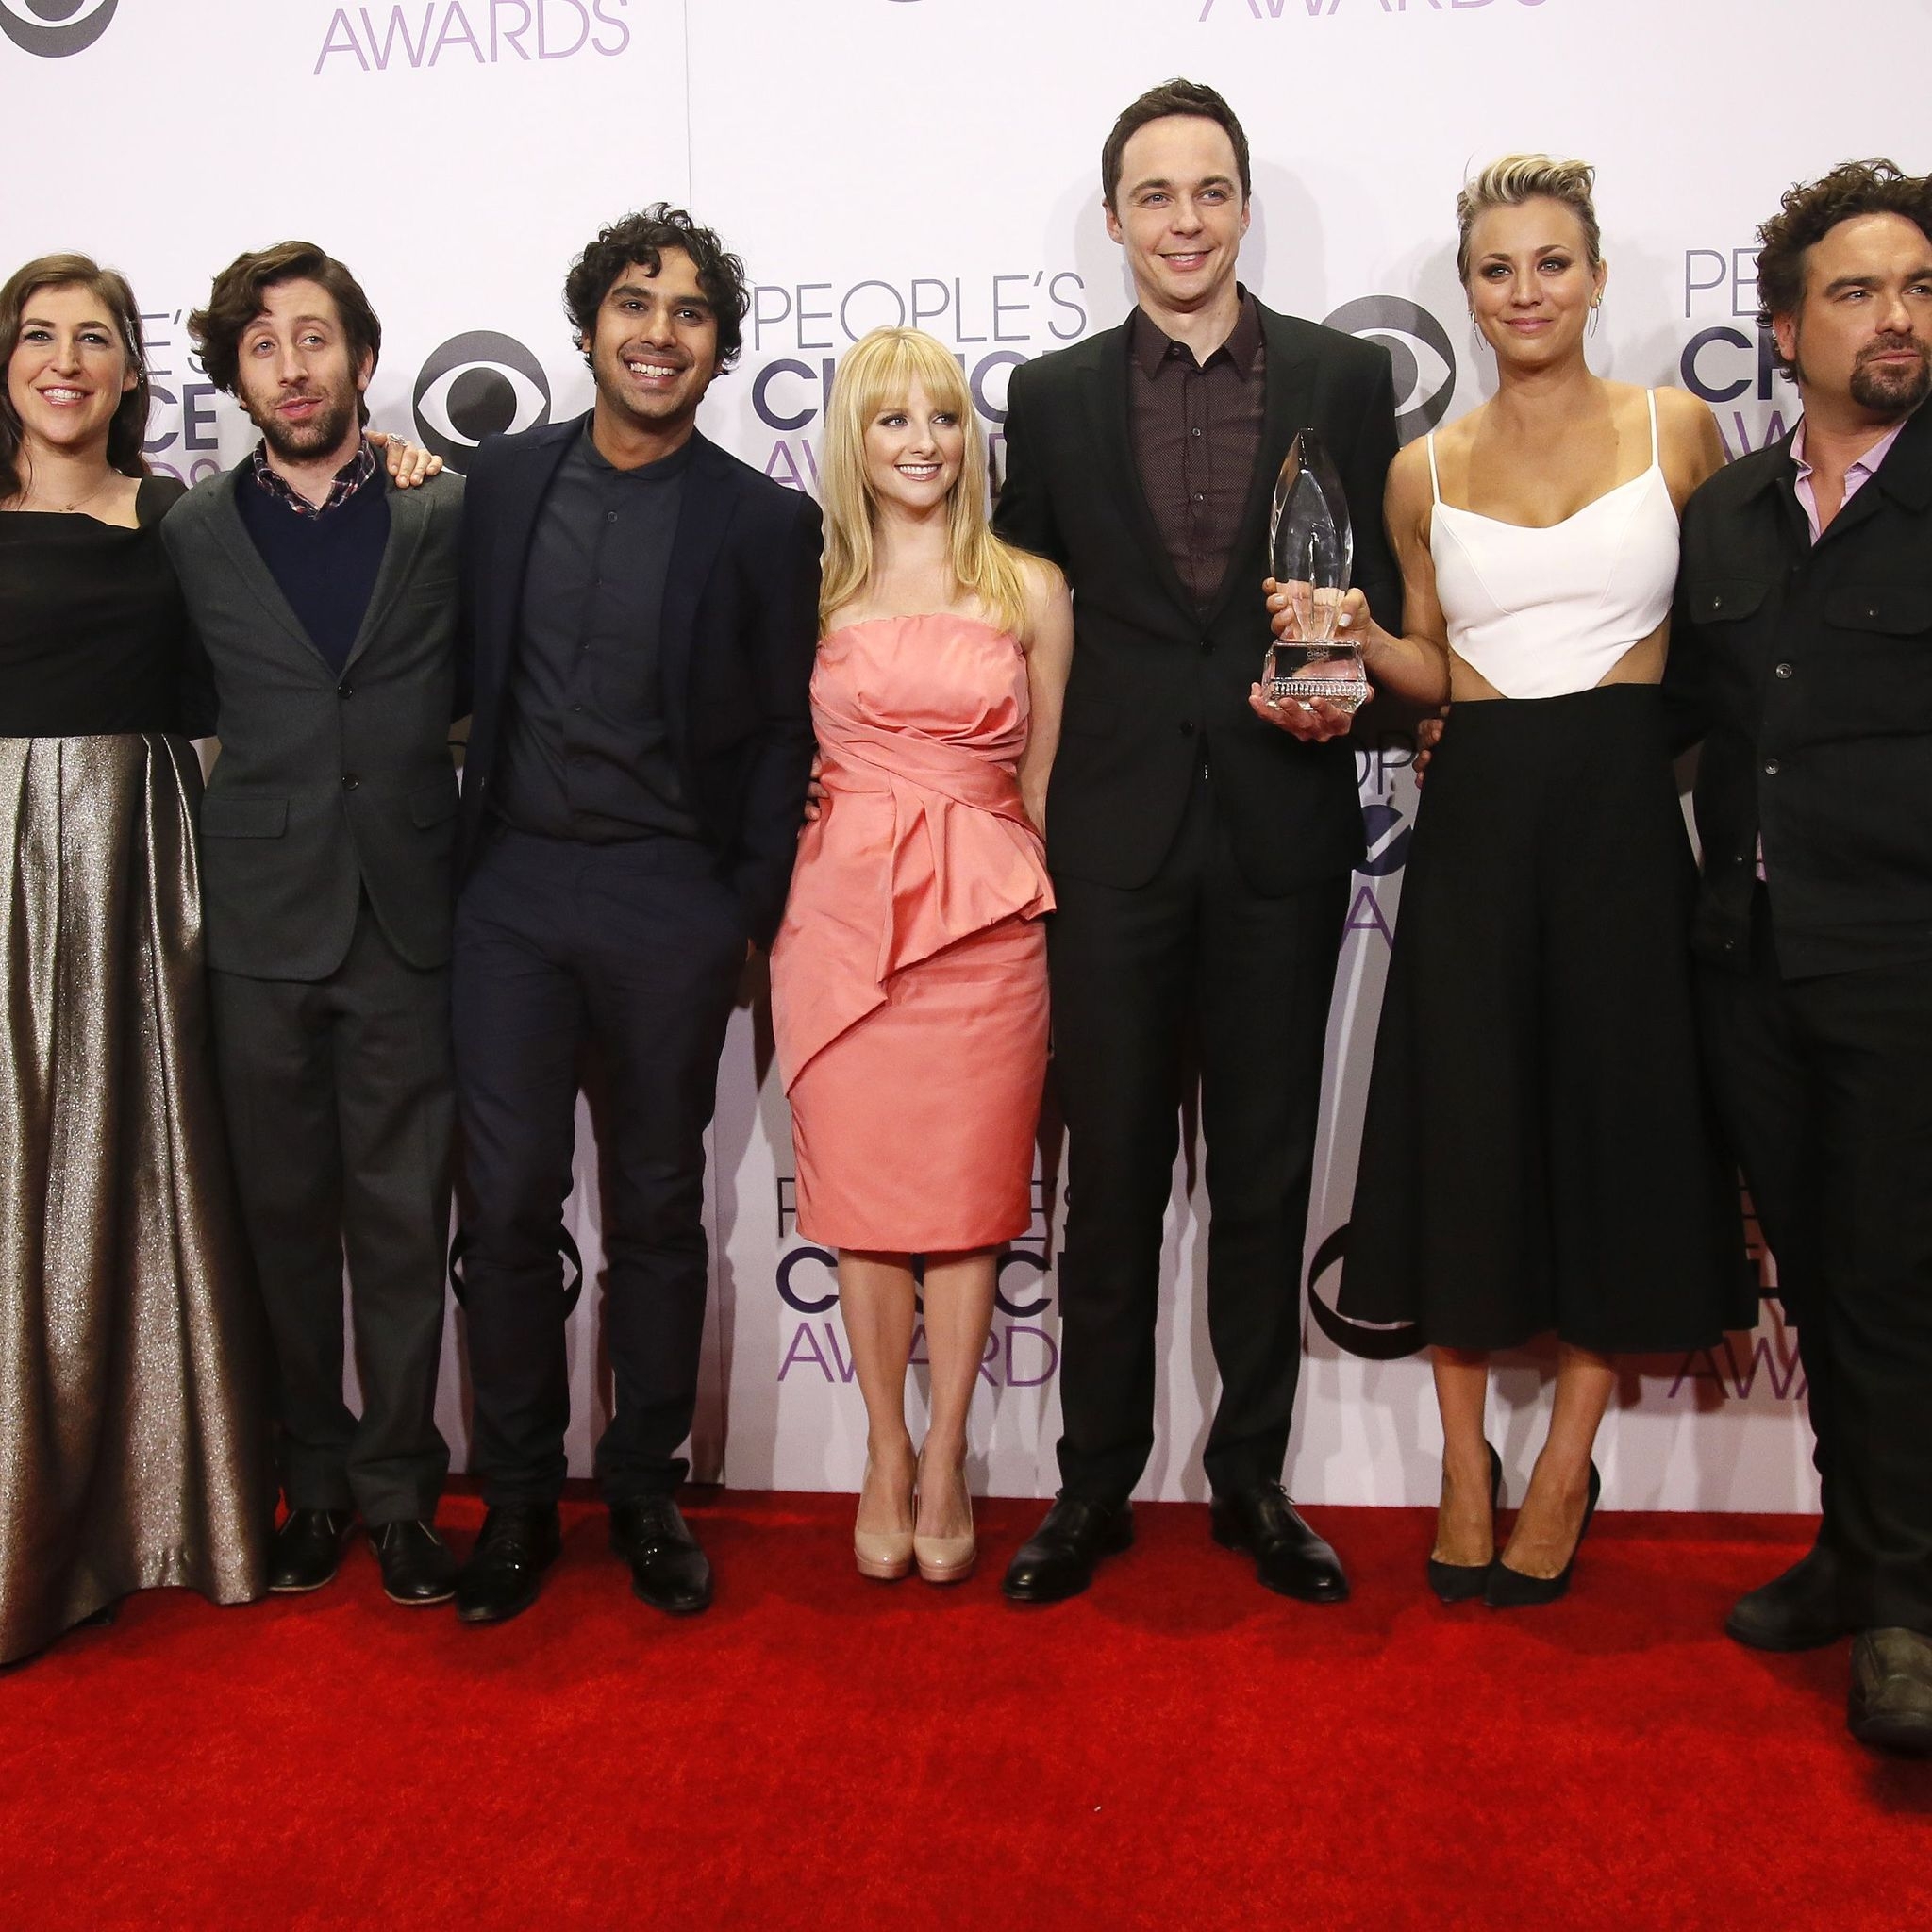 The Big Bang Theory Peoples Choice Awards for 2048 x 2048 New iPad resolution